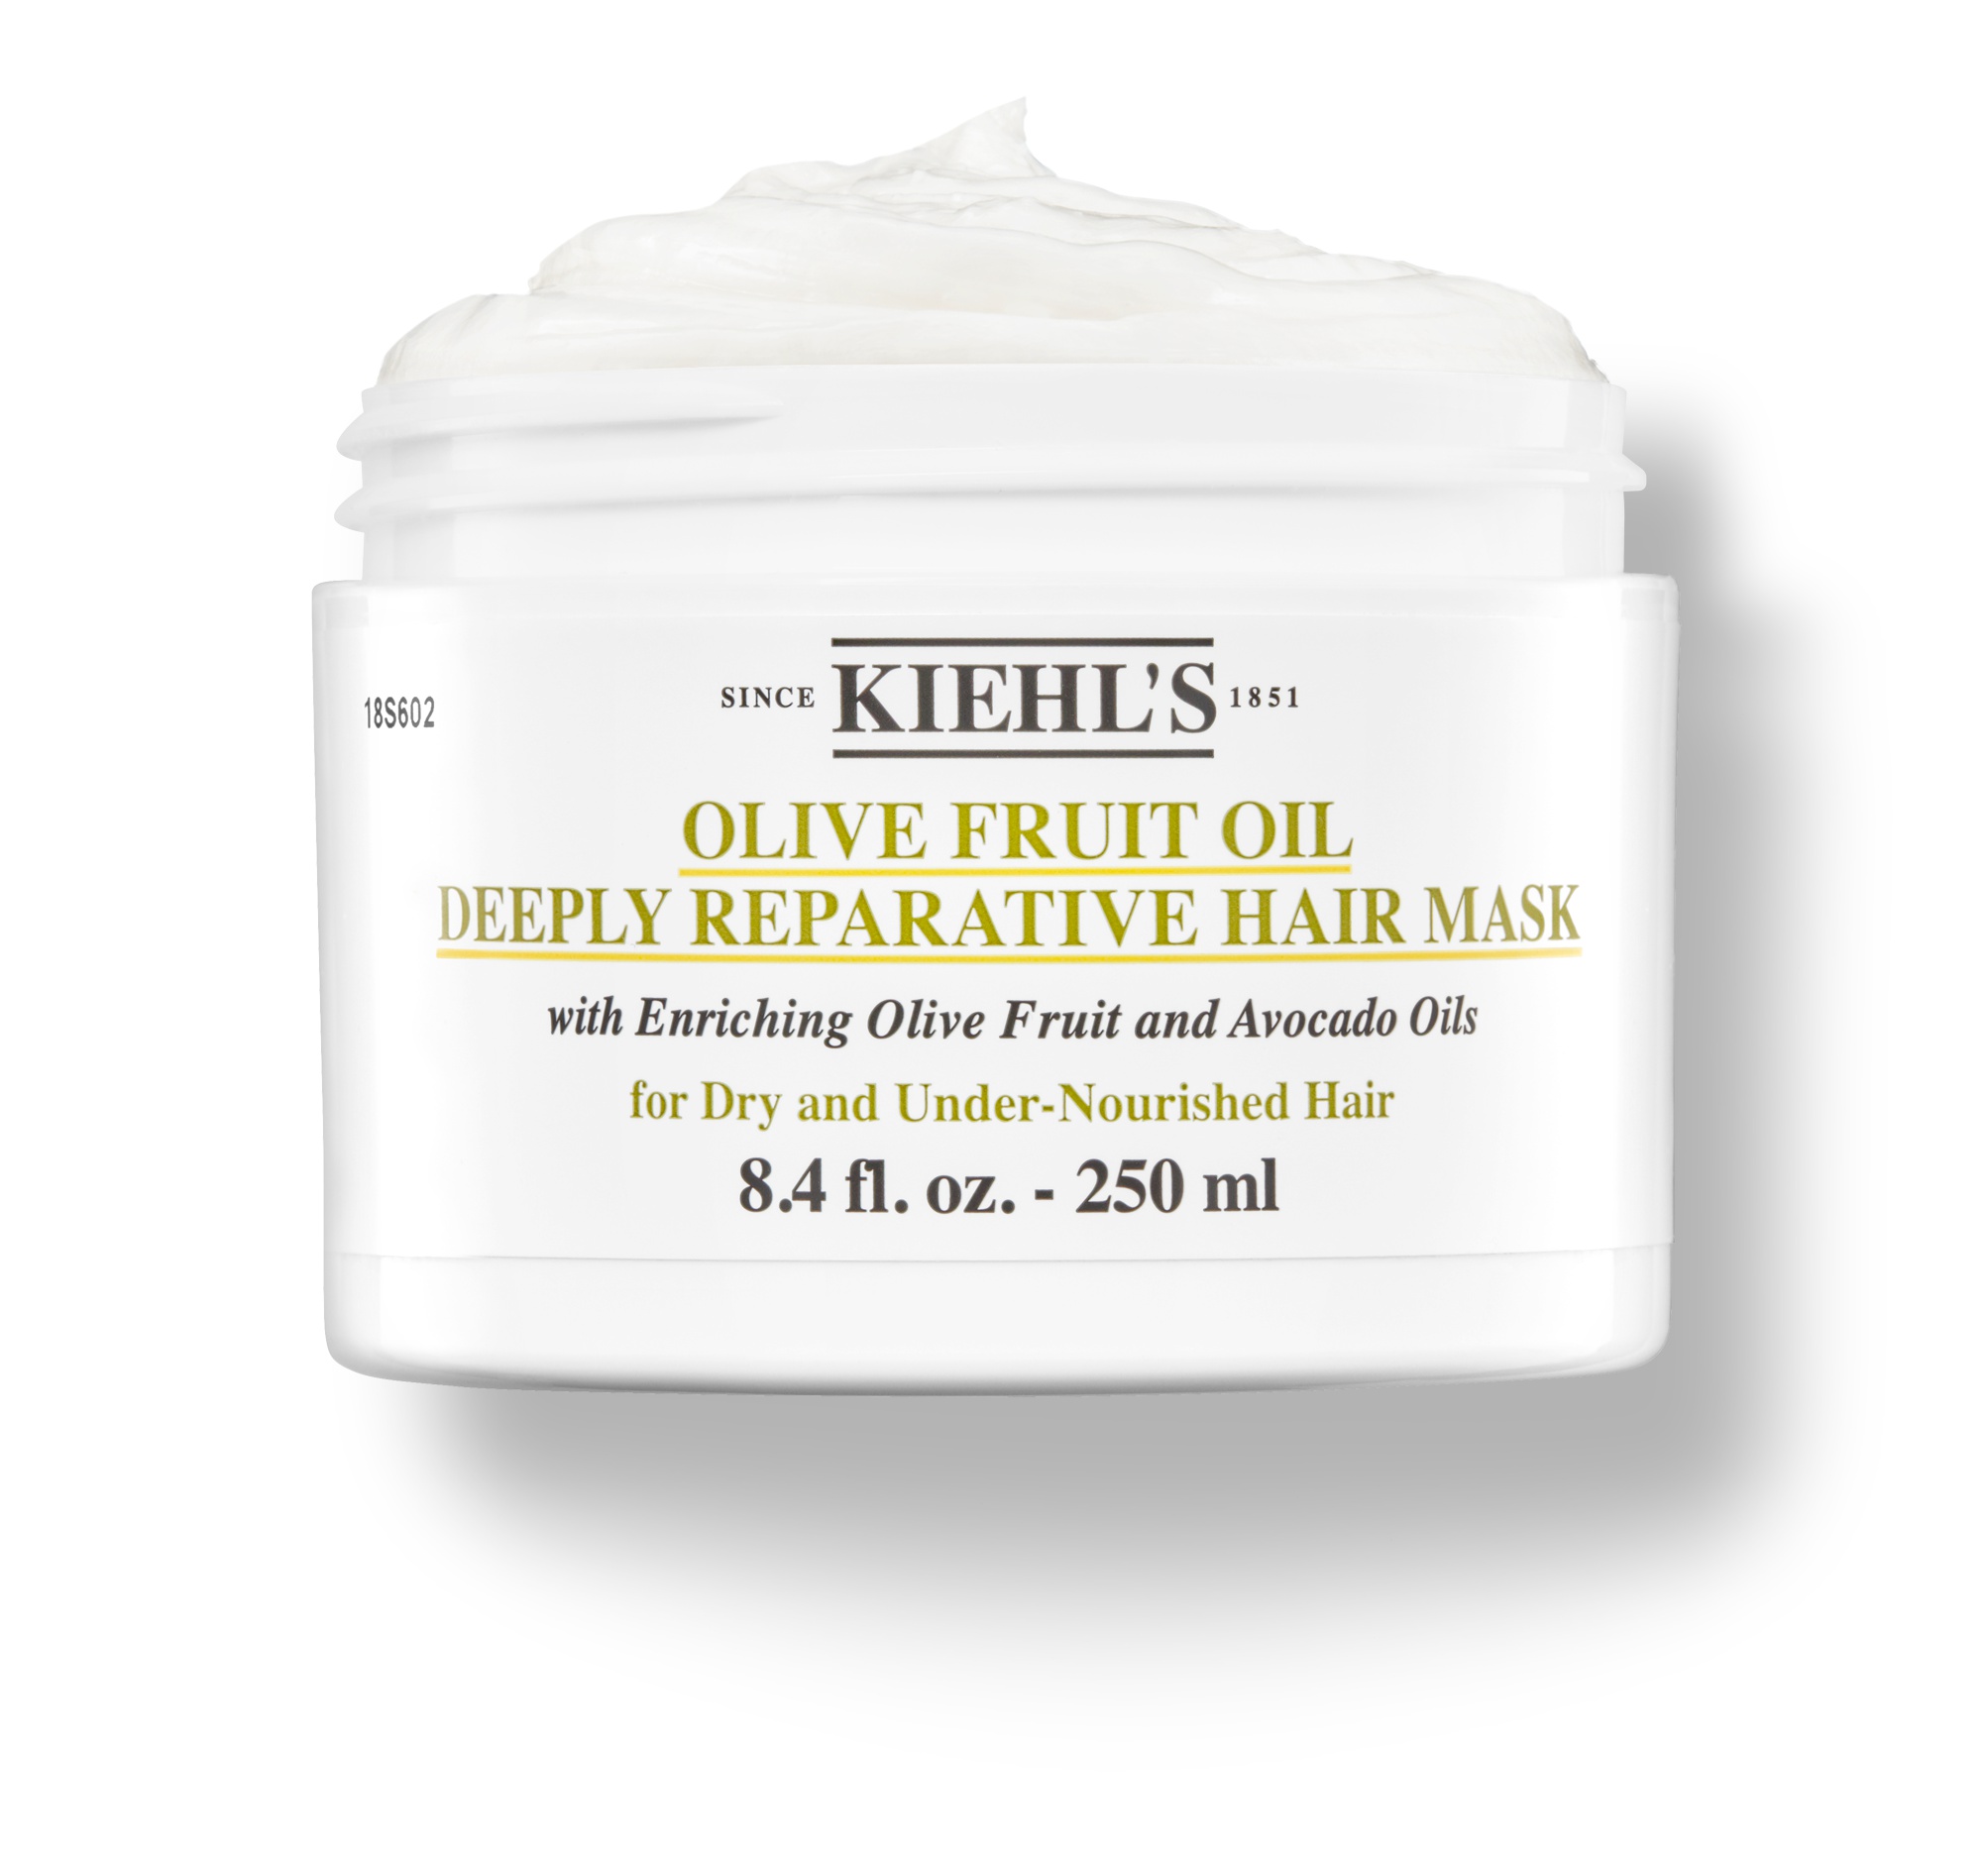 Kiehl’s Olive Fruit Oil Deeply Reparative Hair Mask